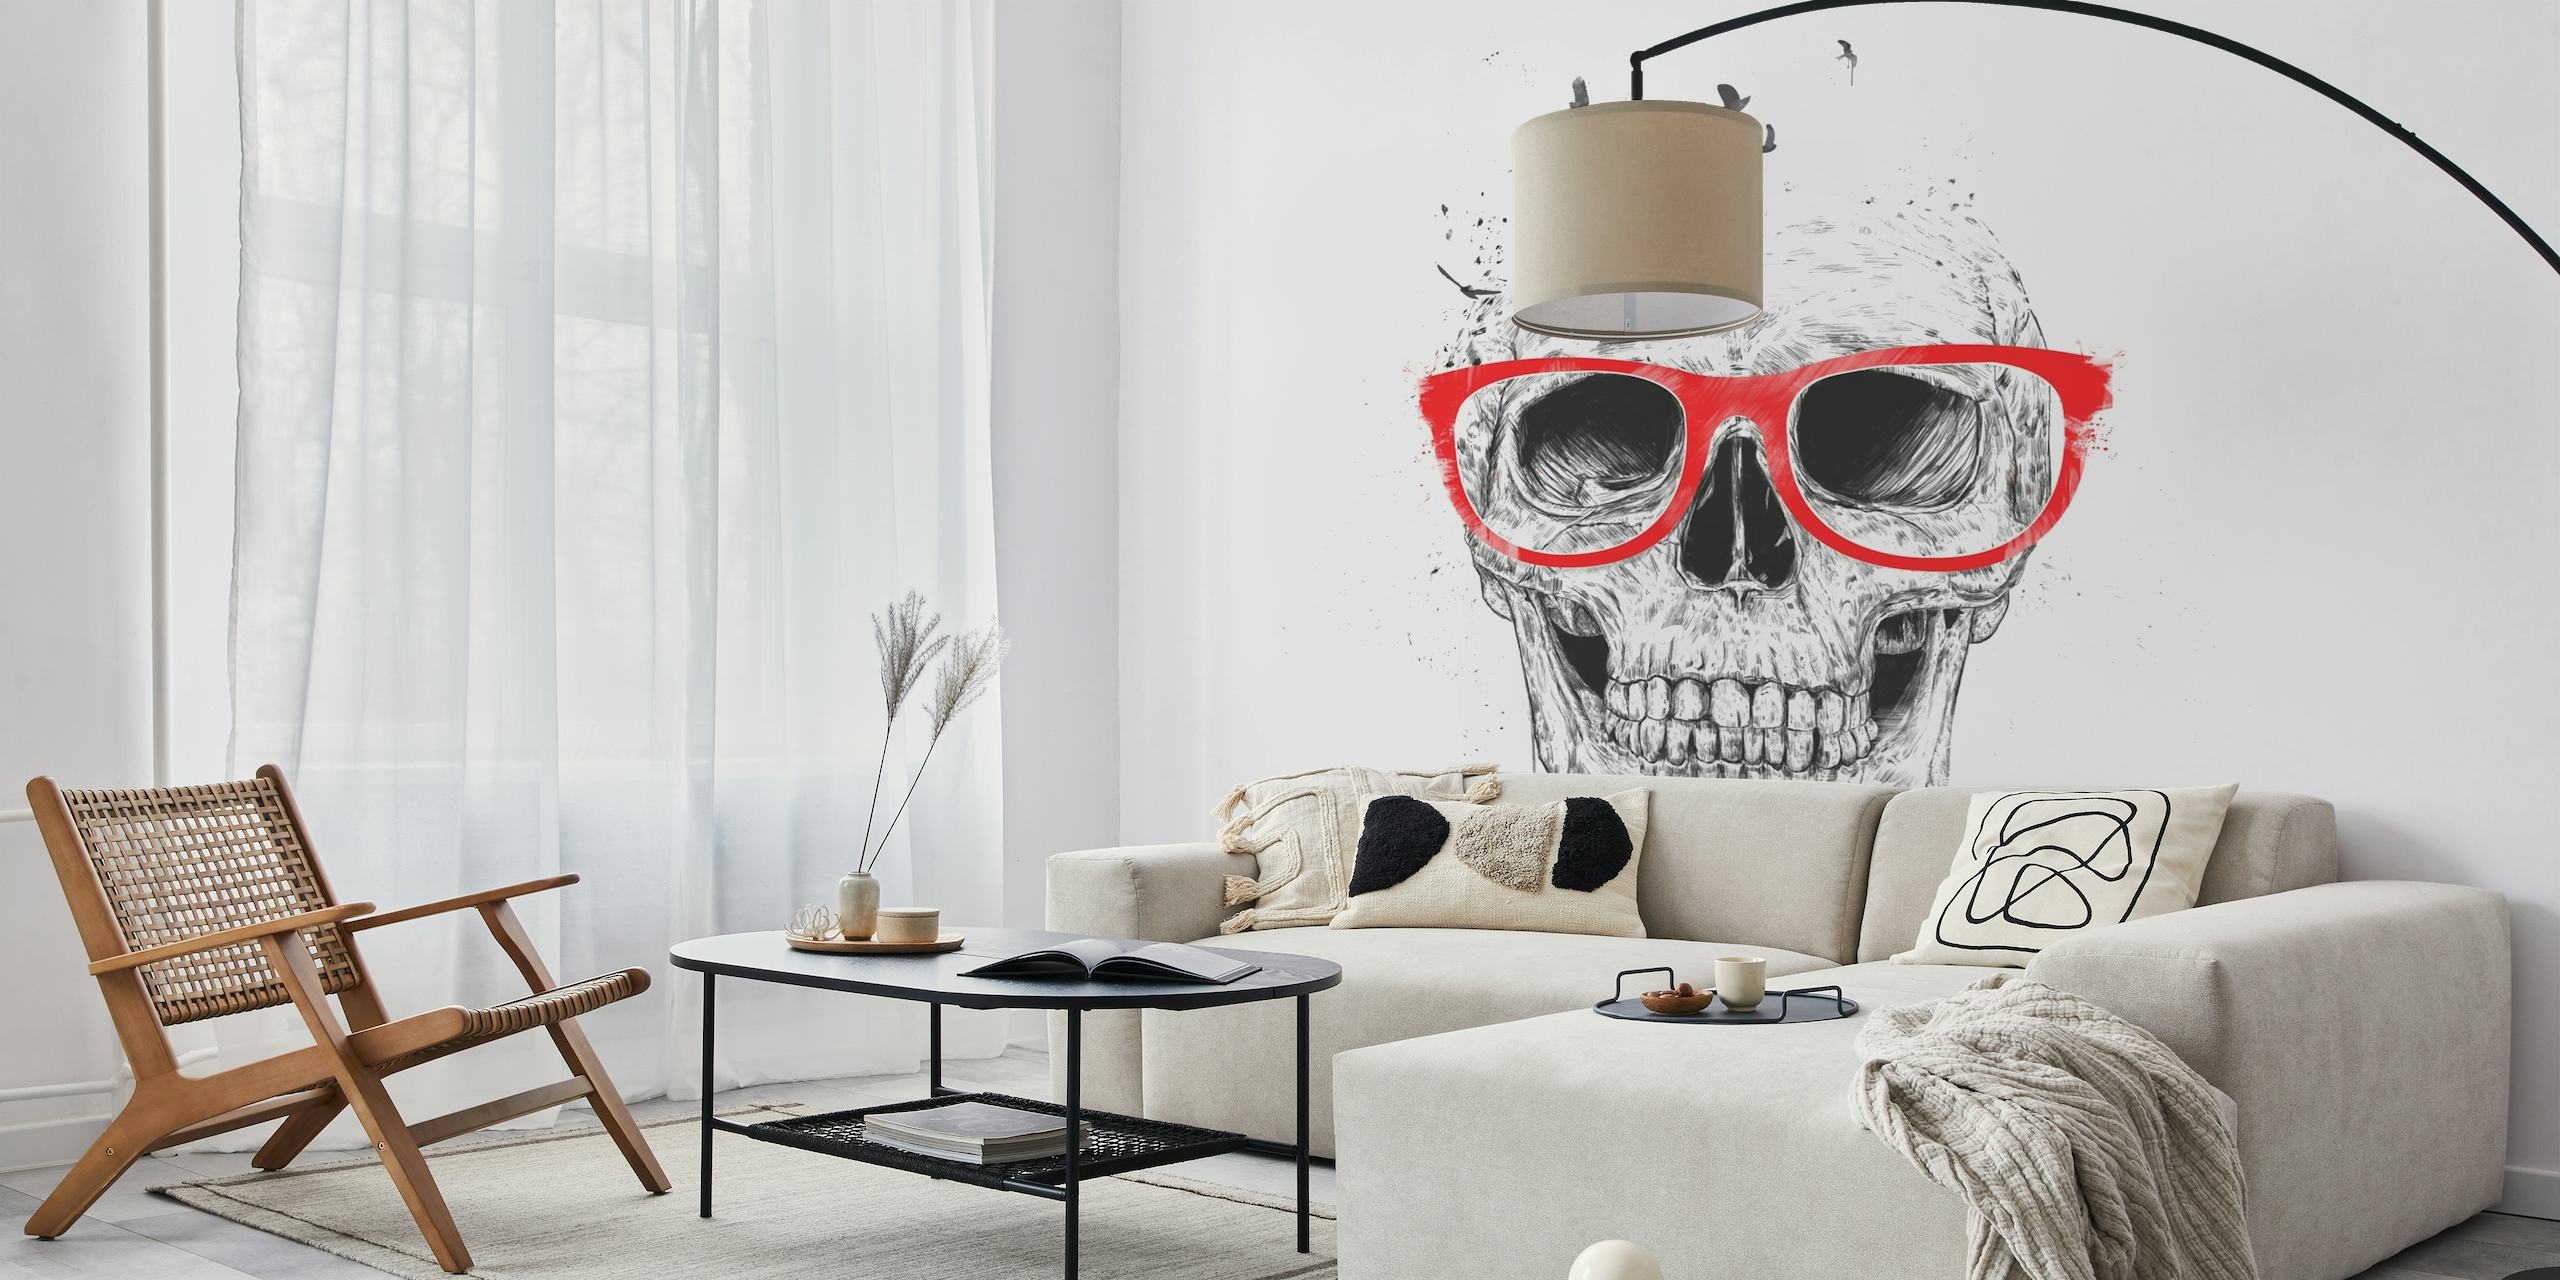 Skull with red glasses wallpaper